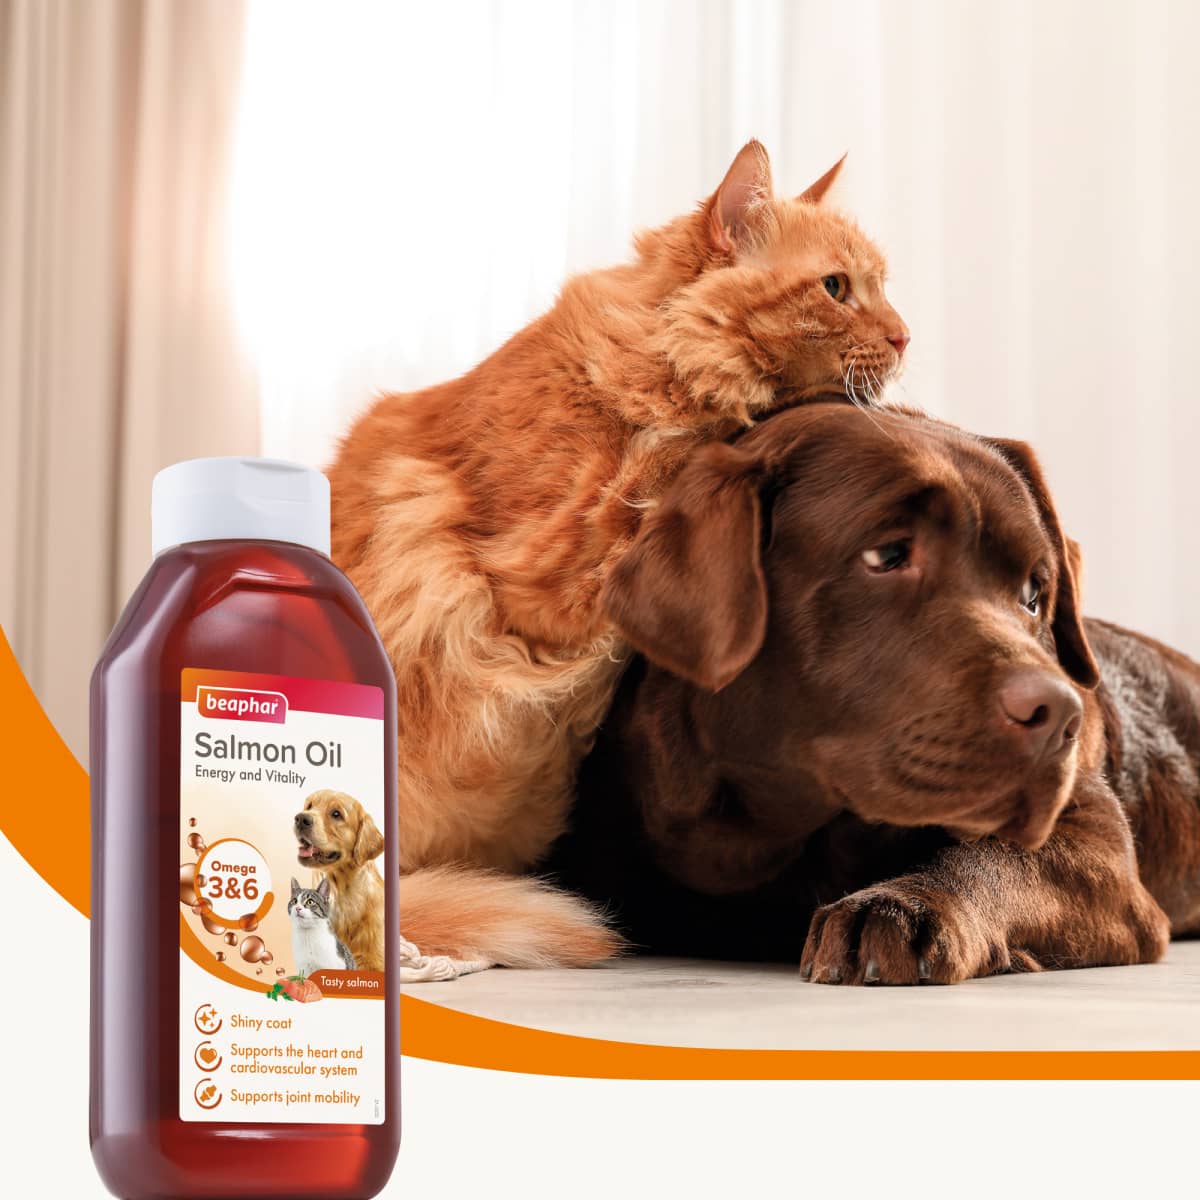 Beaphar Salmon Oil for Cats & Dogs Main Image